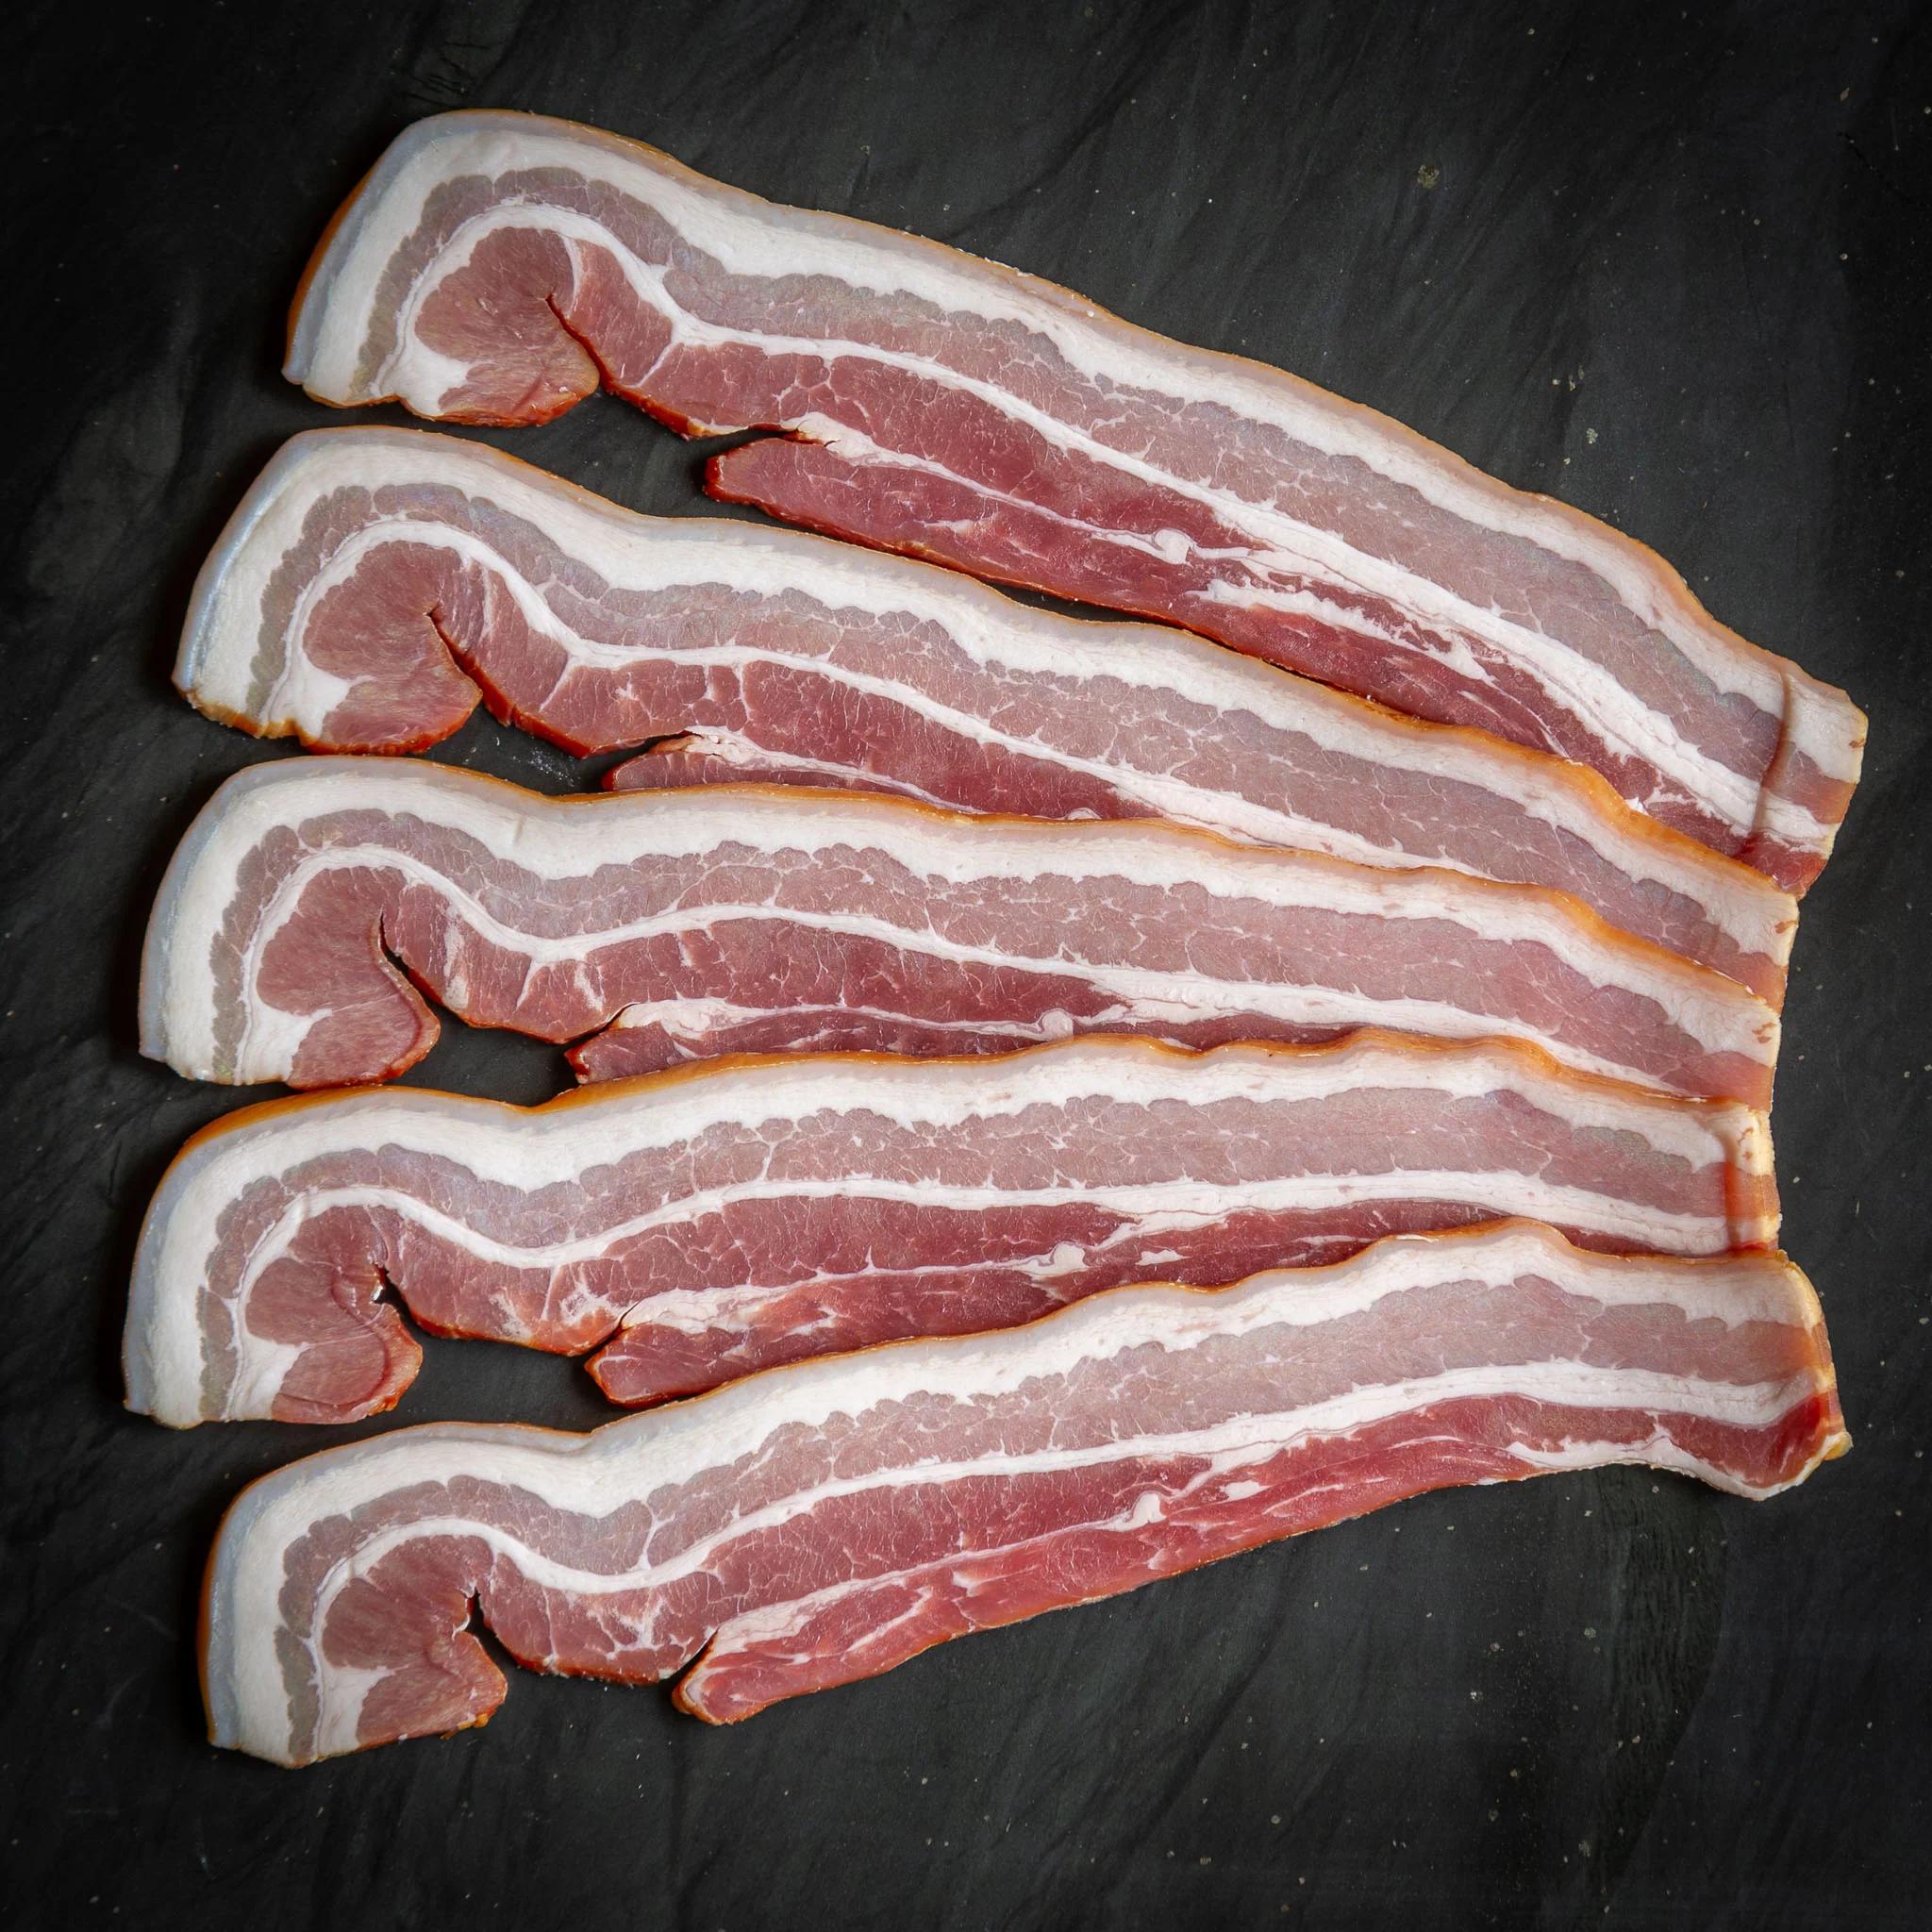 rashers smoked streaky bacon - How much is 4 rashers of bacon